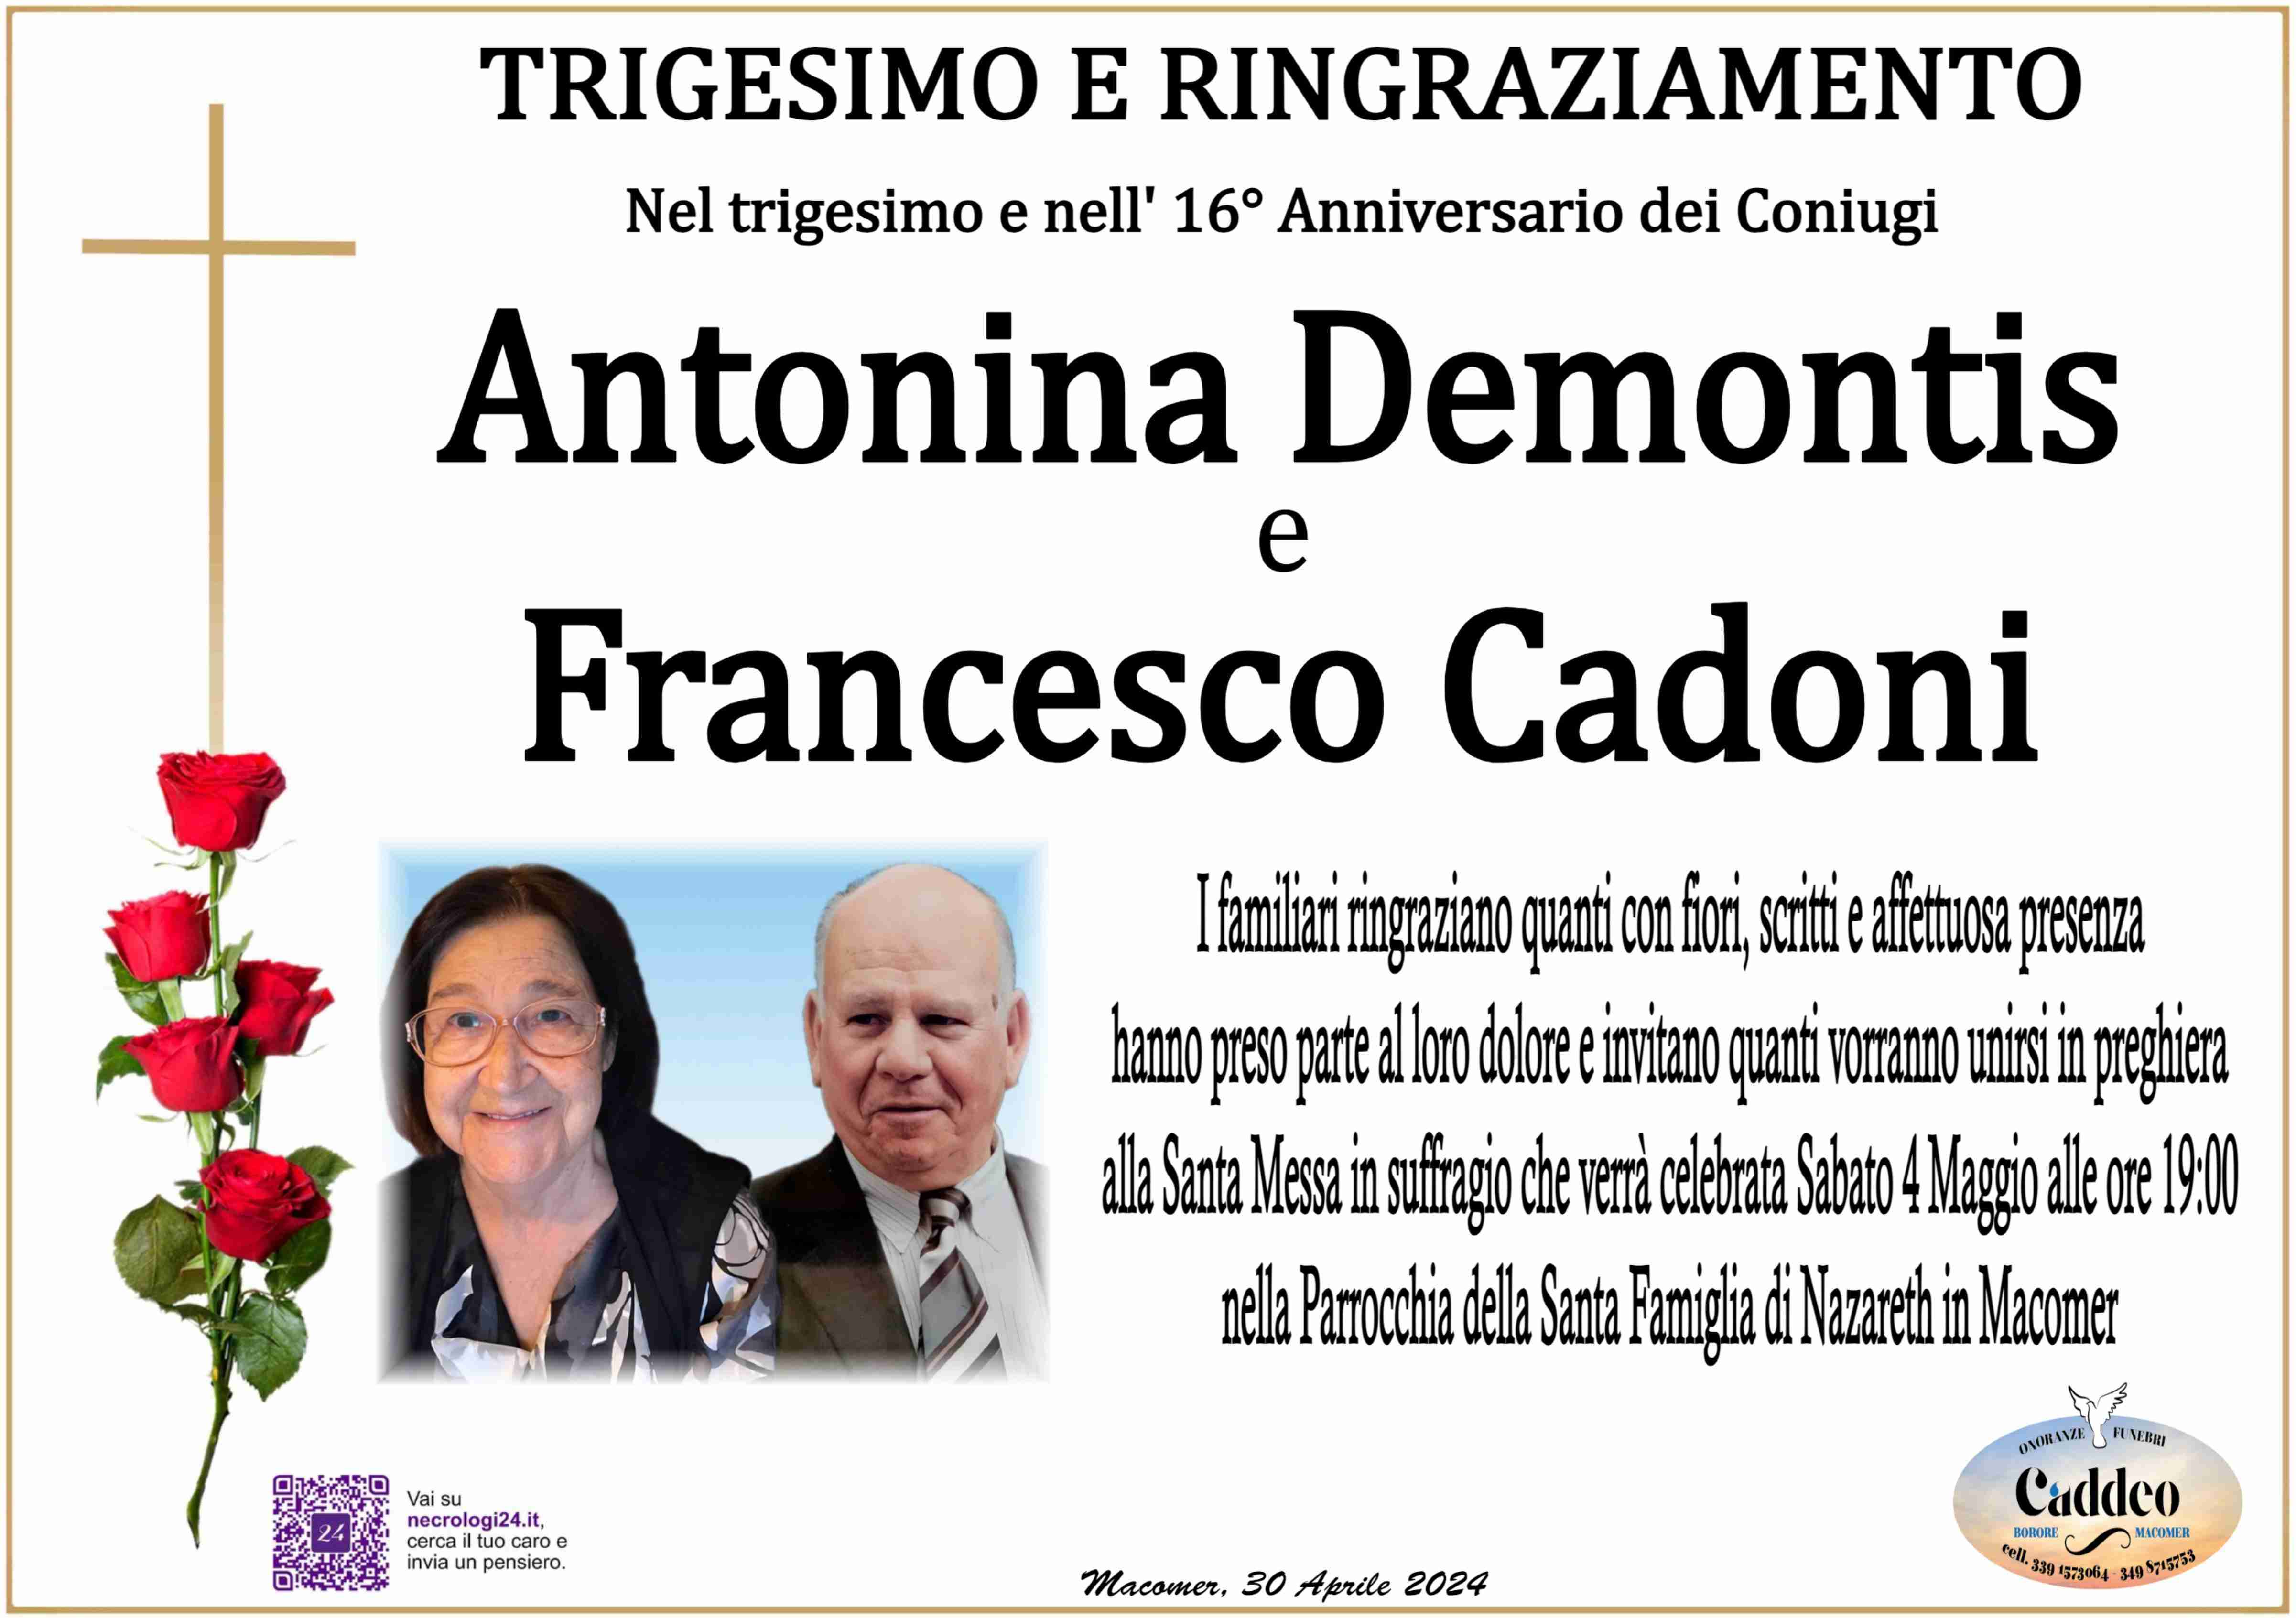 Antonina Demontis e Francesco Cadoni